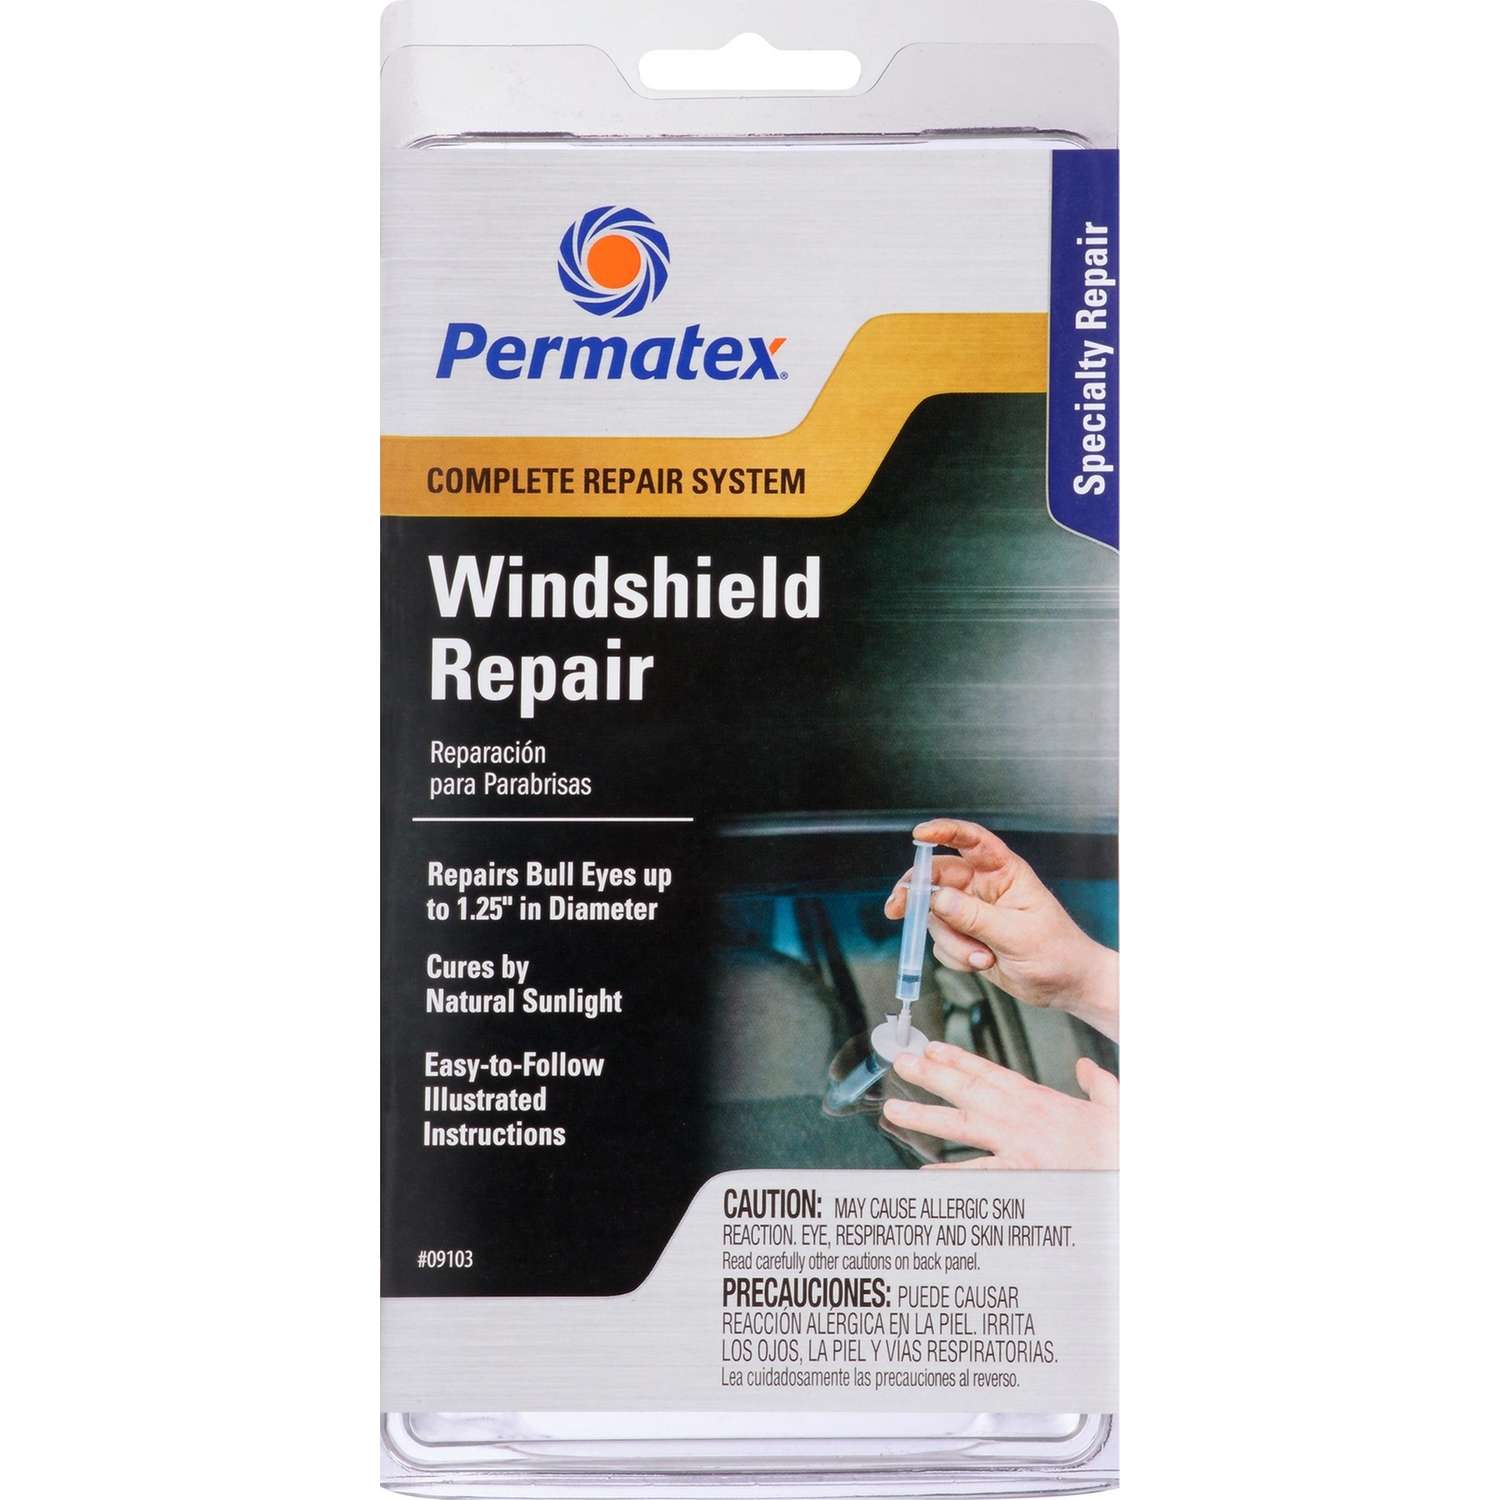 Rain X Windshield Repair Review – Does It Work?